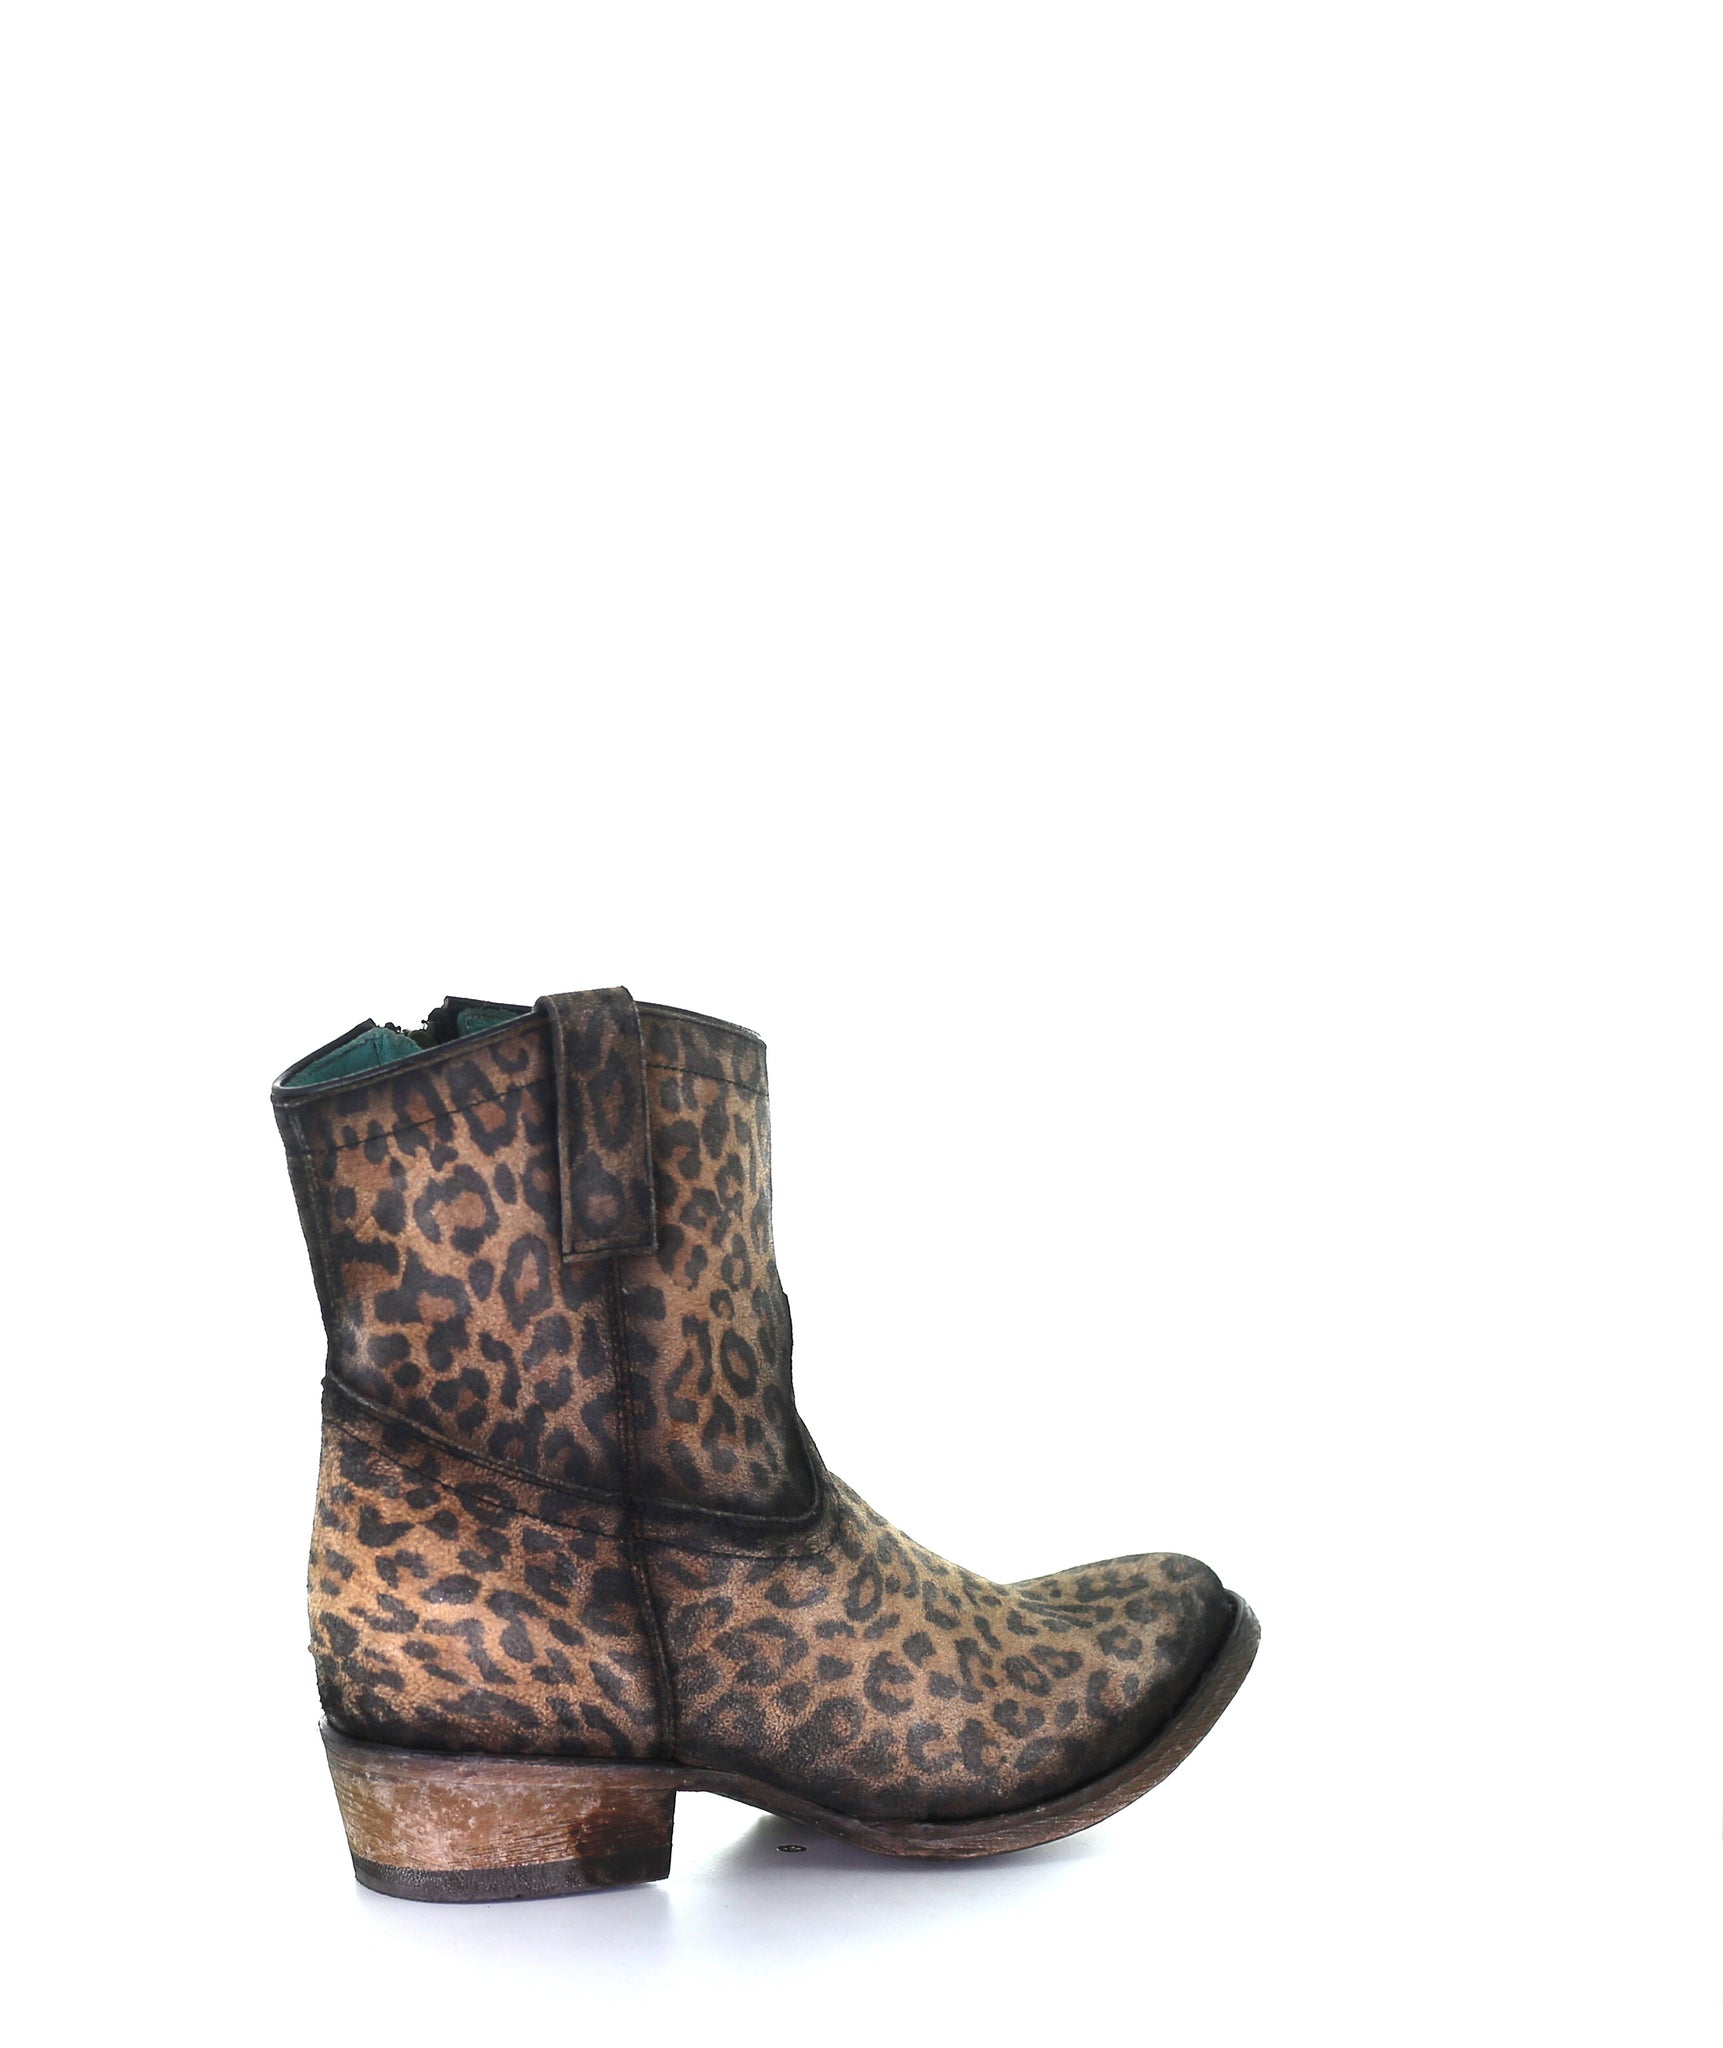 ladies leopard print ankle boots